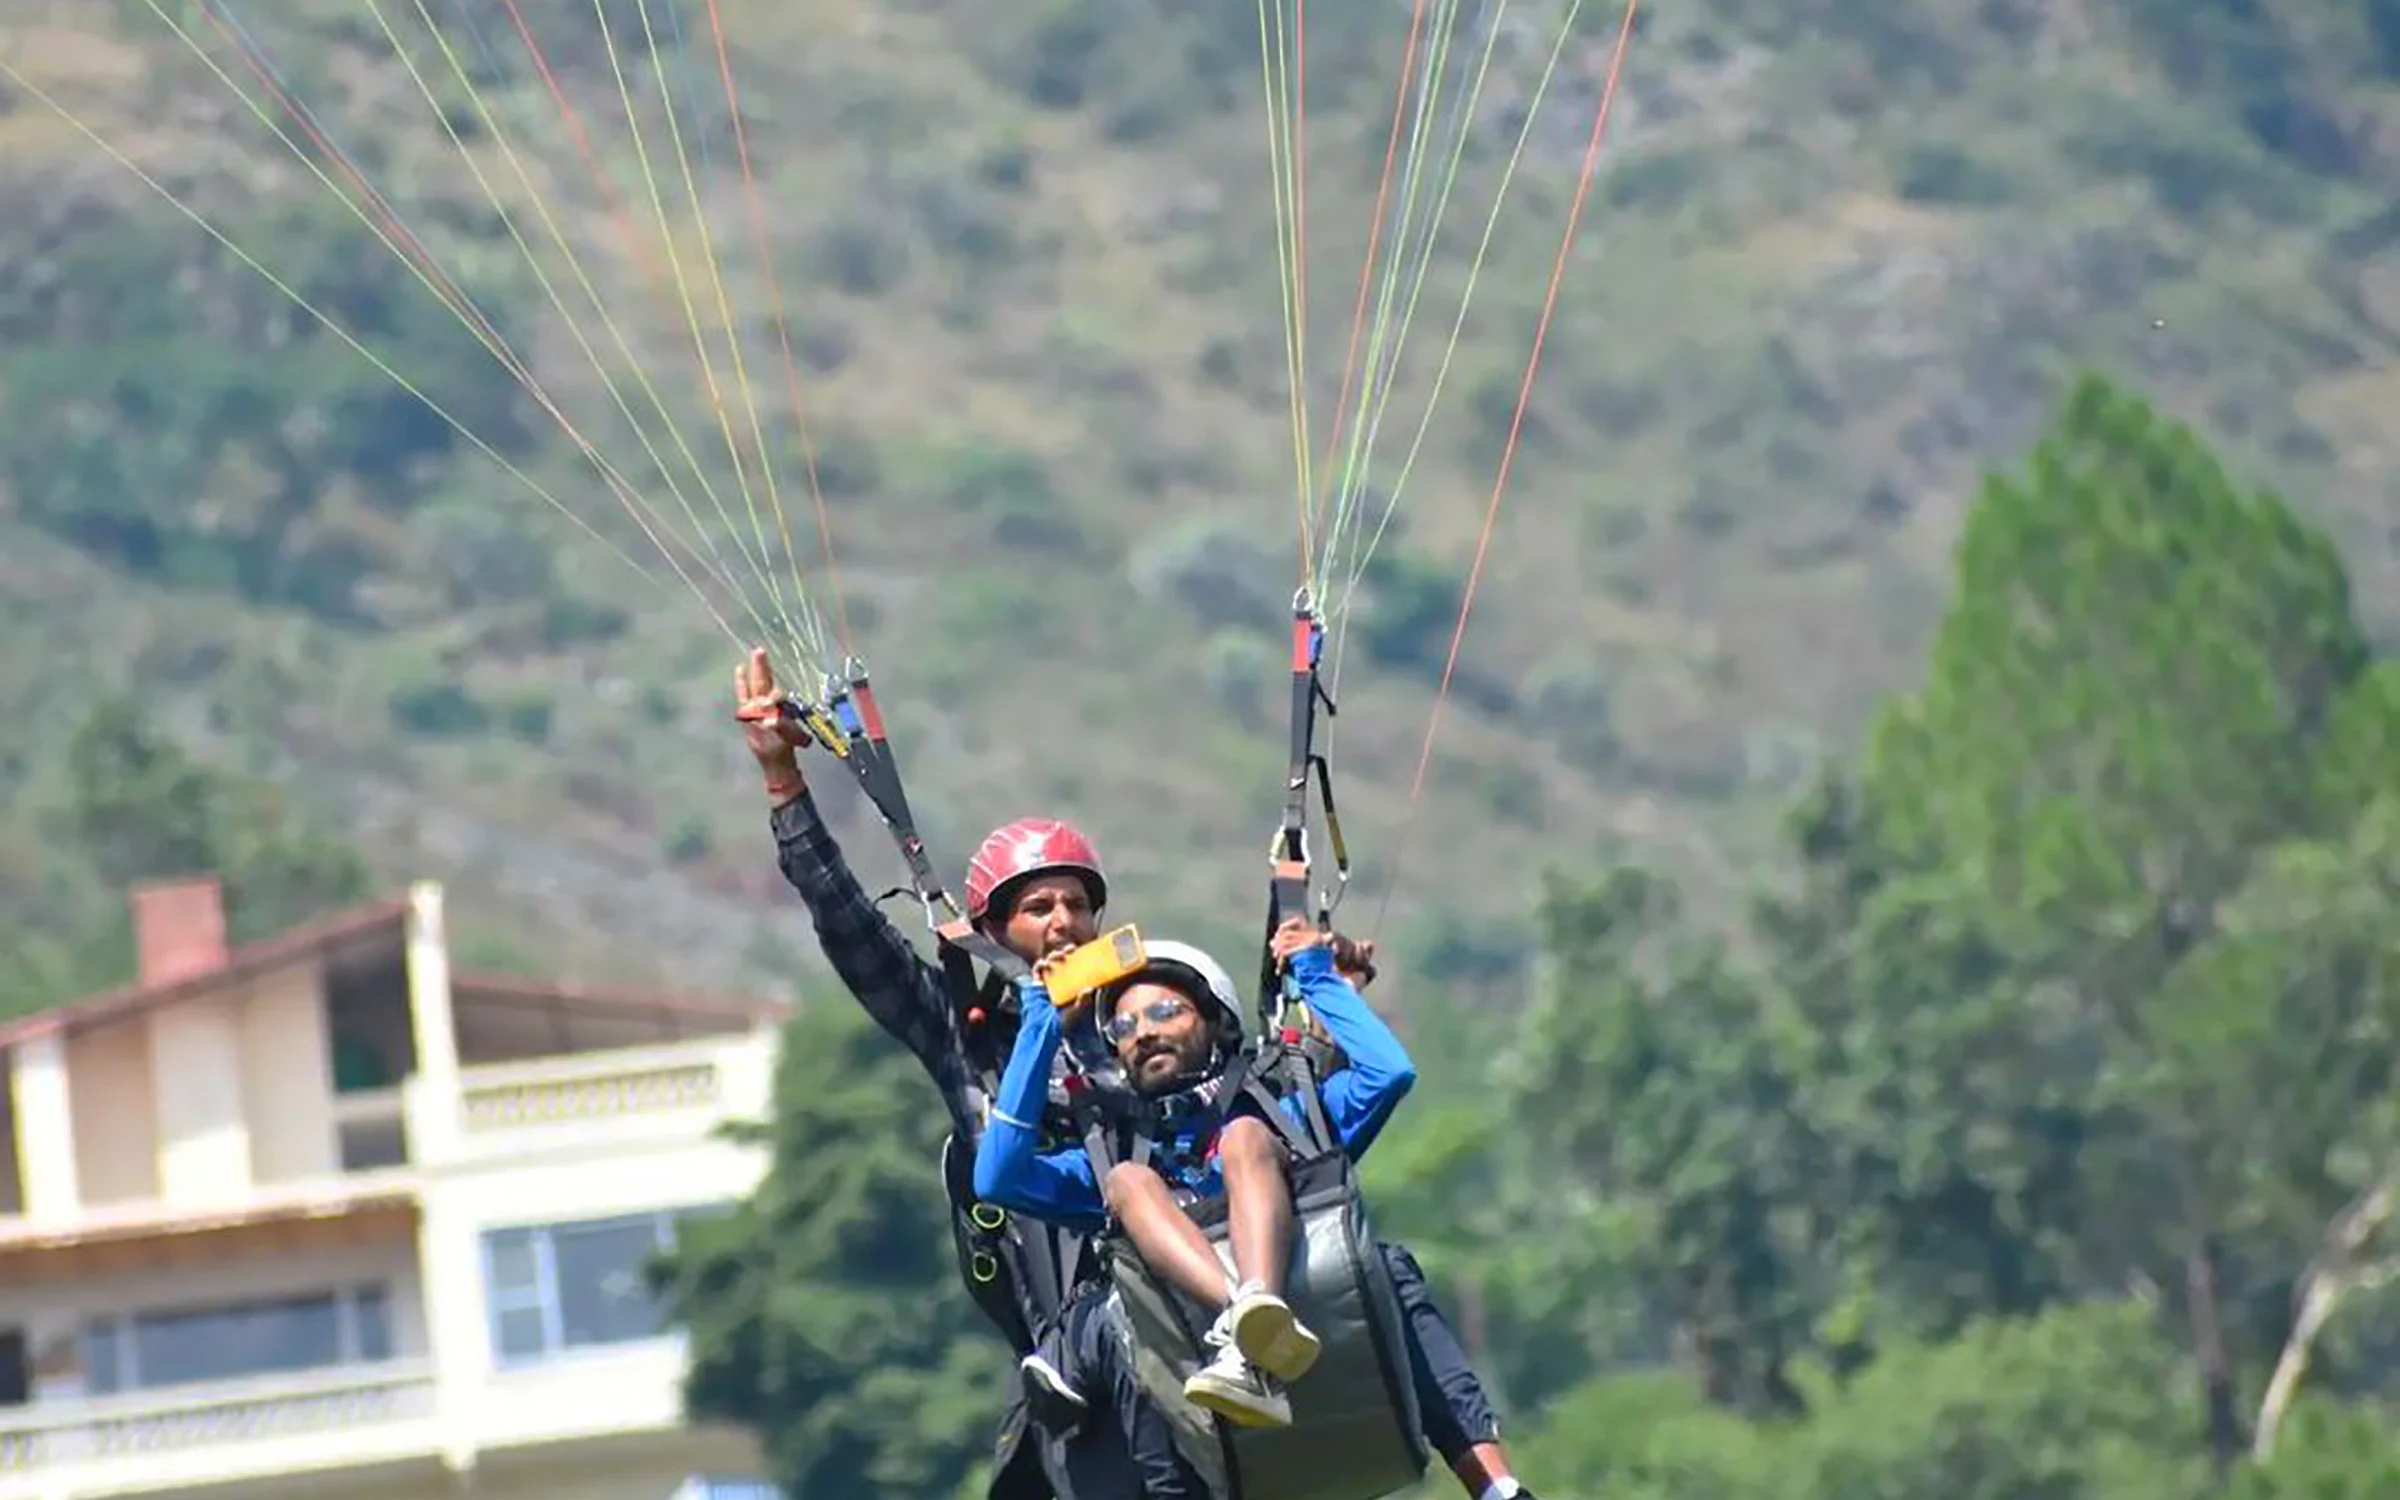 Paragliding in Bhimtal